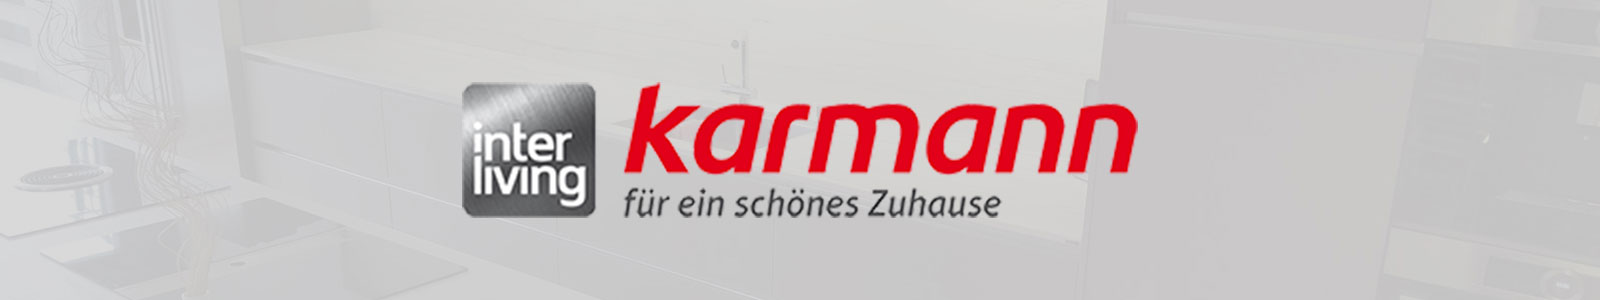 kuechenguide.com-moebel-karmann-banner